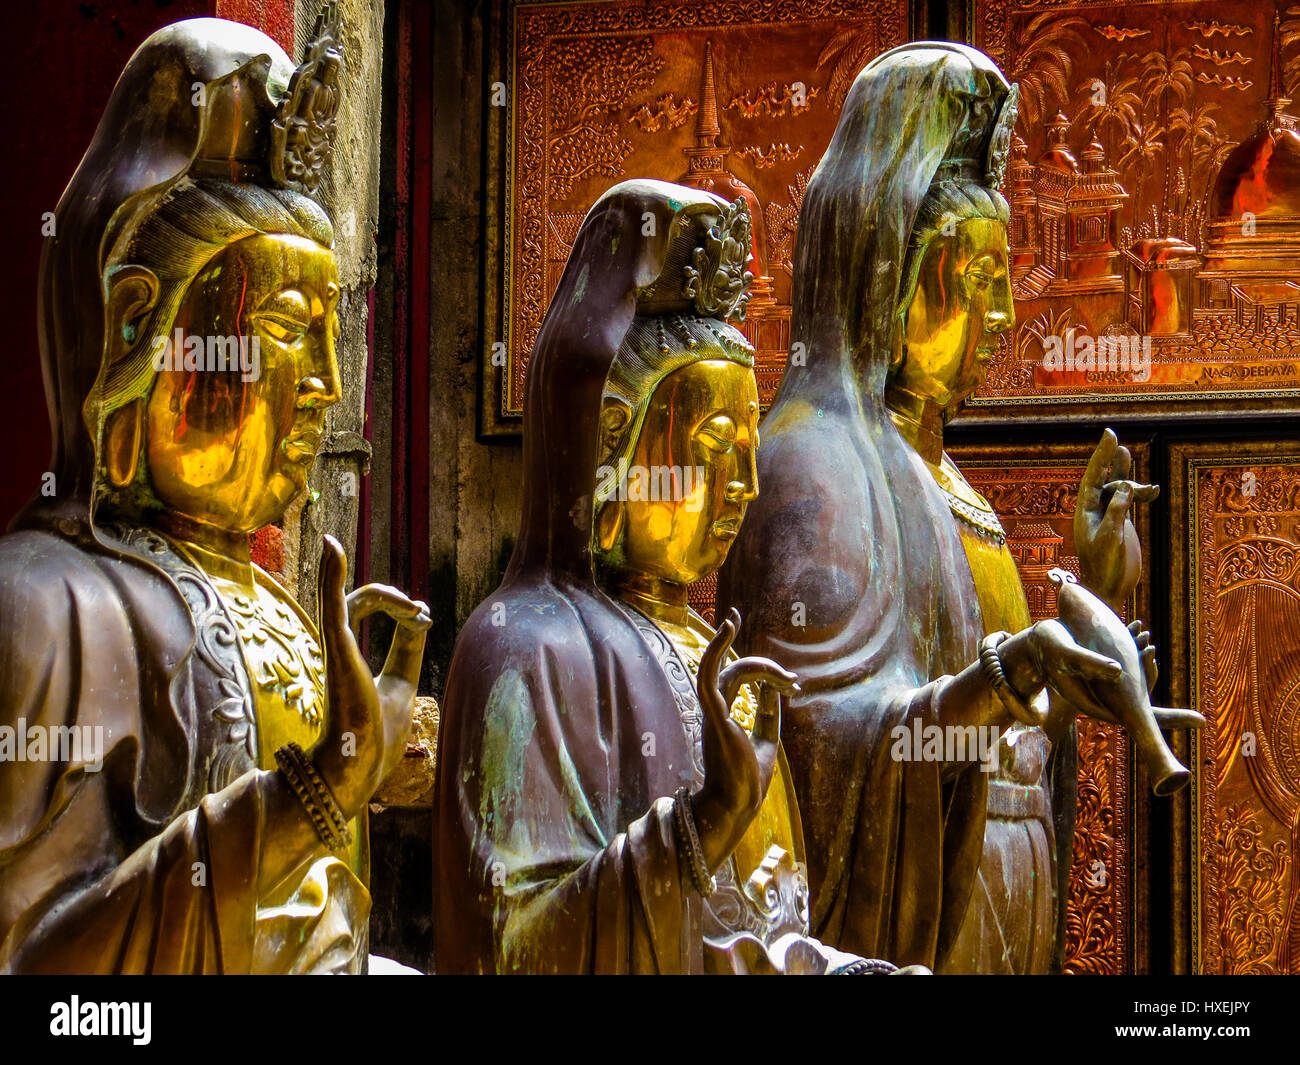 Statues in Gangaramaya Buddhist Temple in Colombo, Sri Lanka Stock Photo